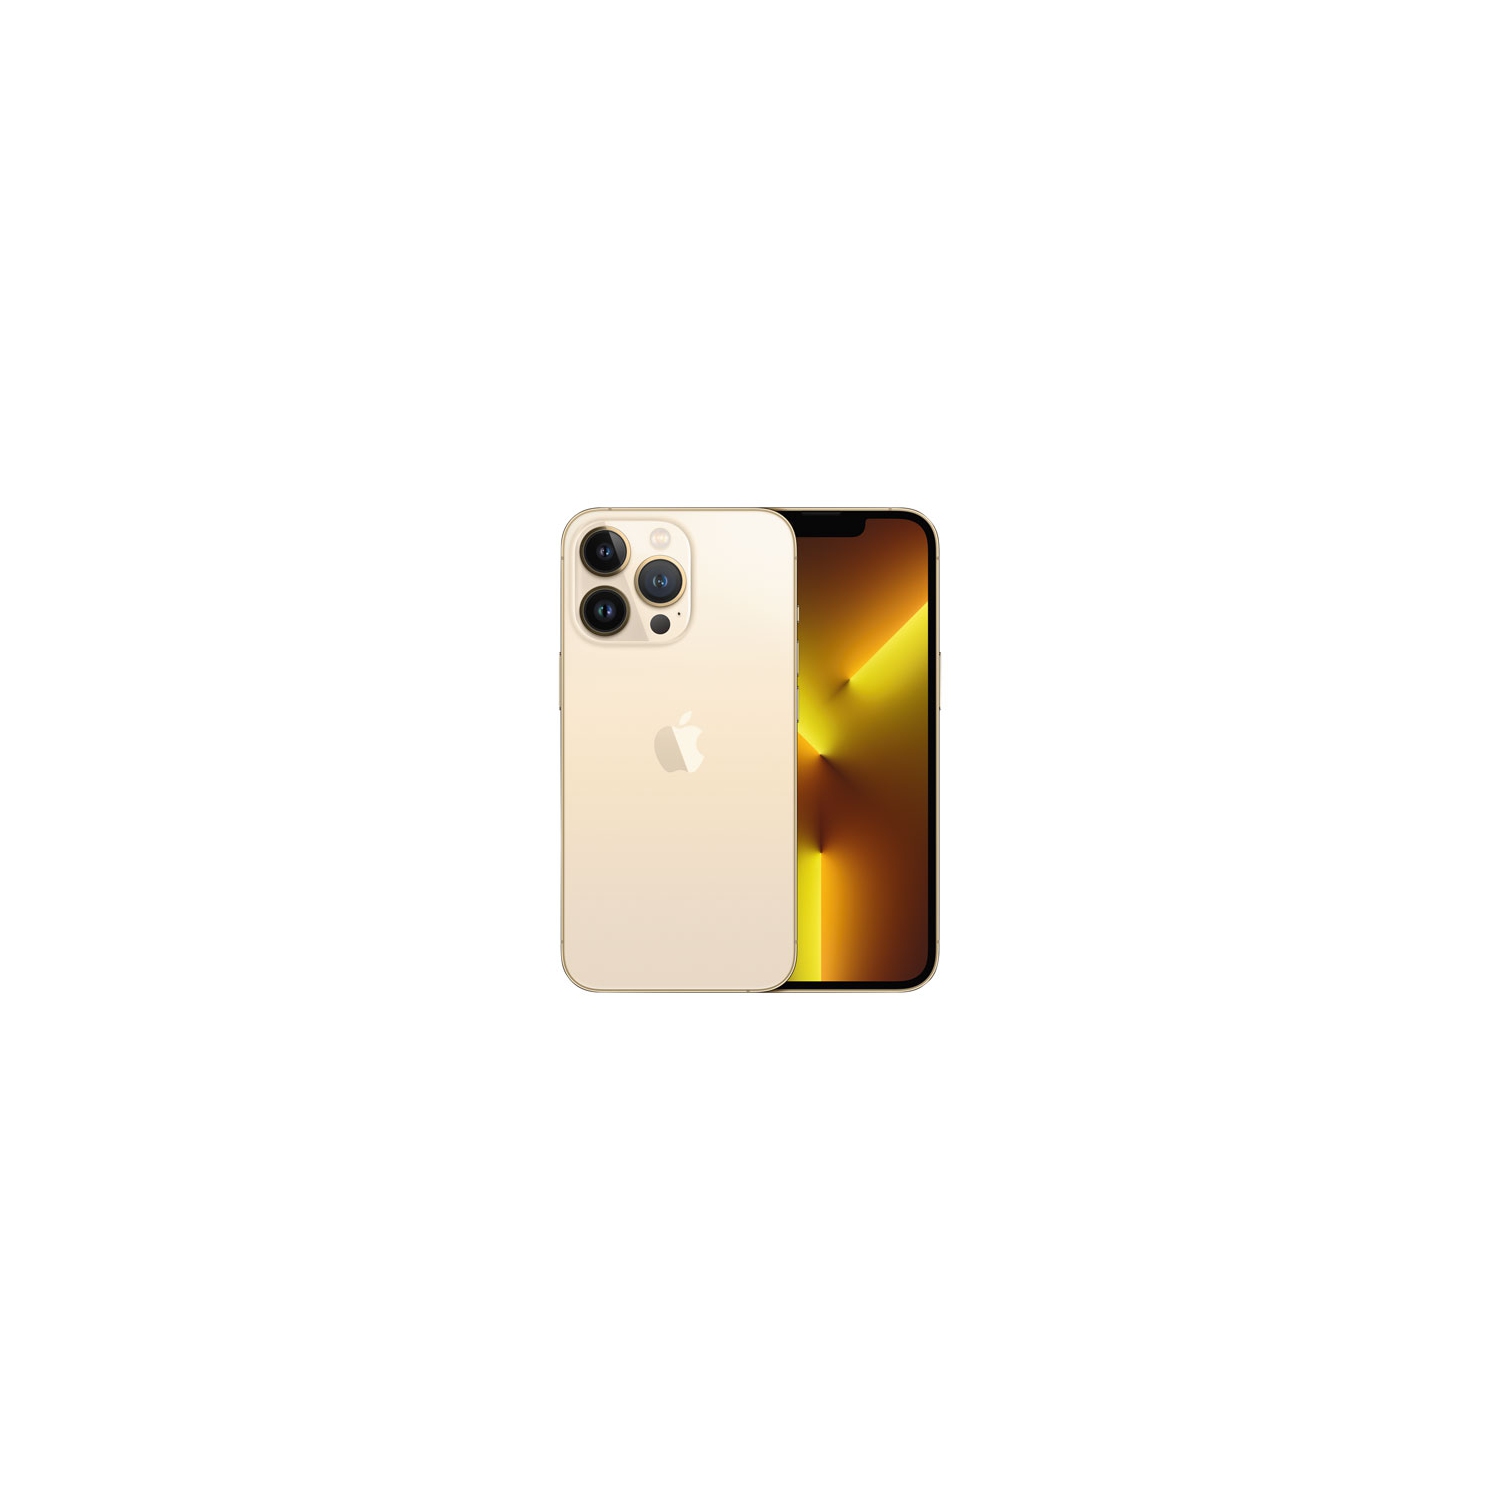 Apple iPhone 13 Pro 128GB - Gold - Unlocked - Open Box